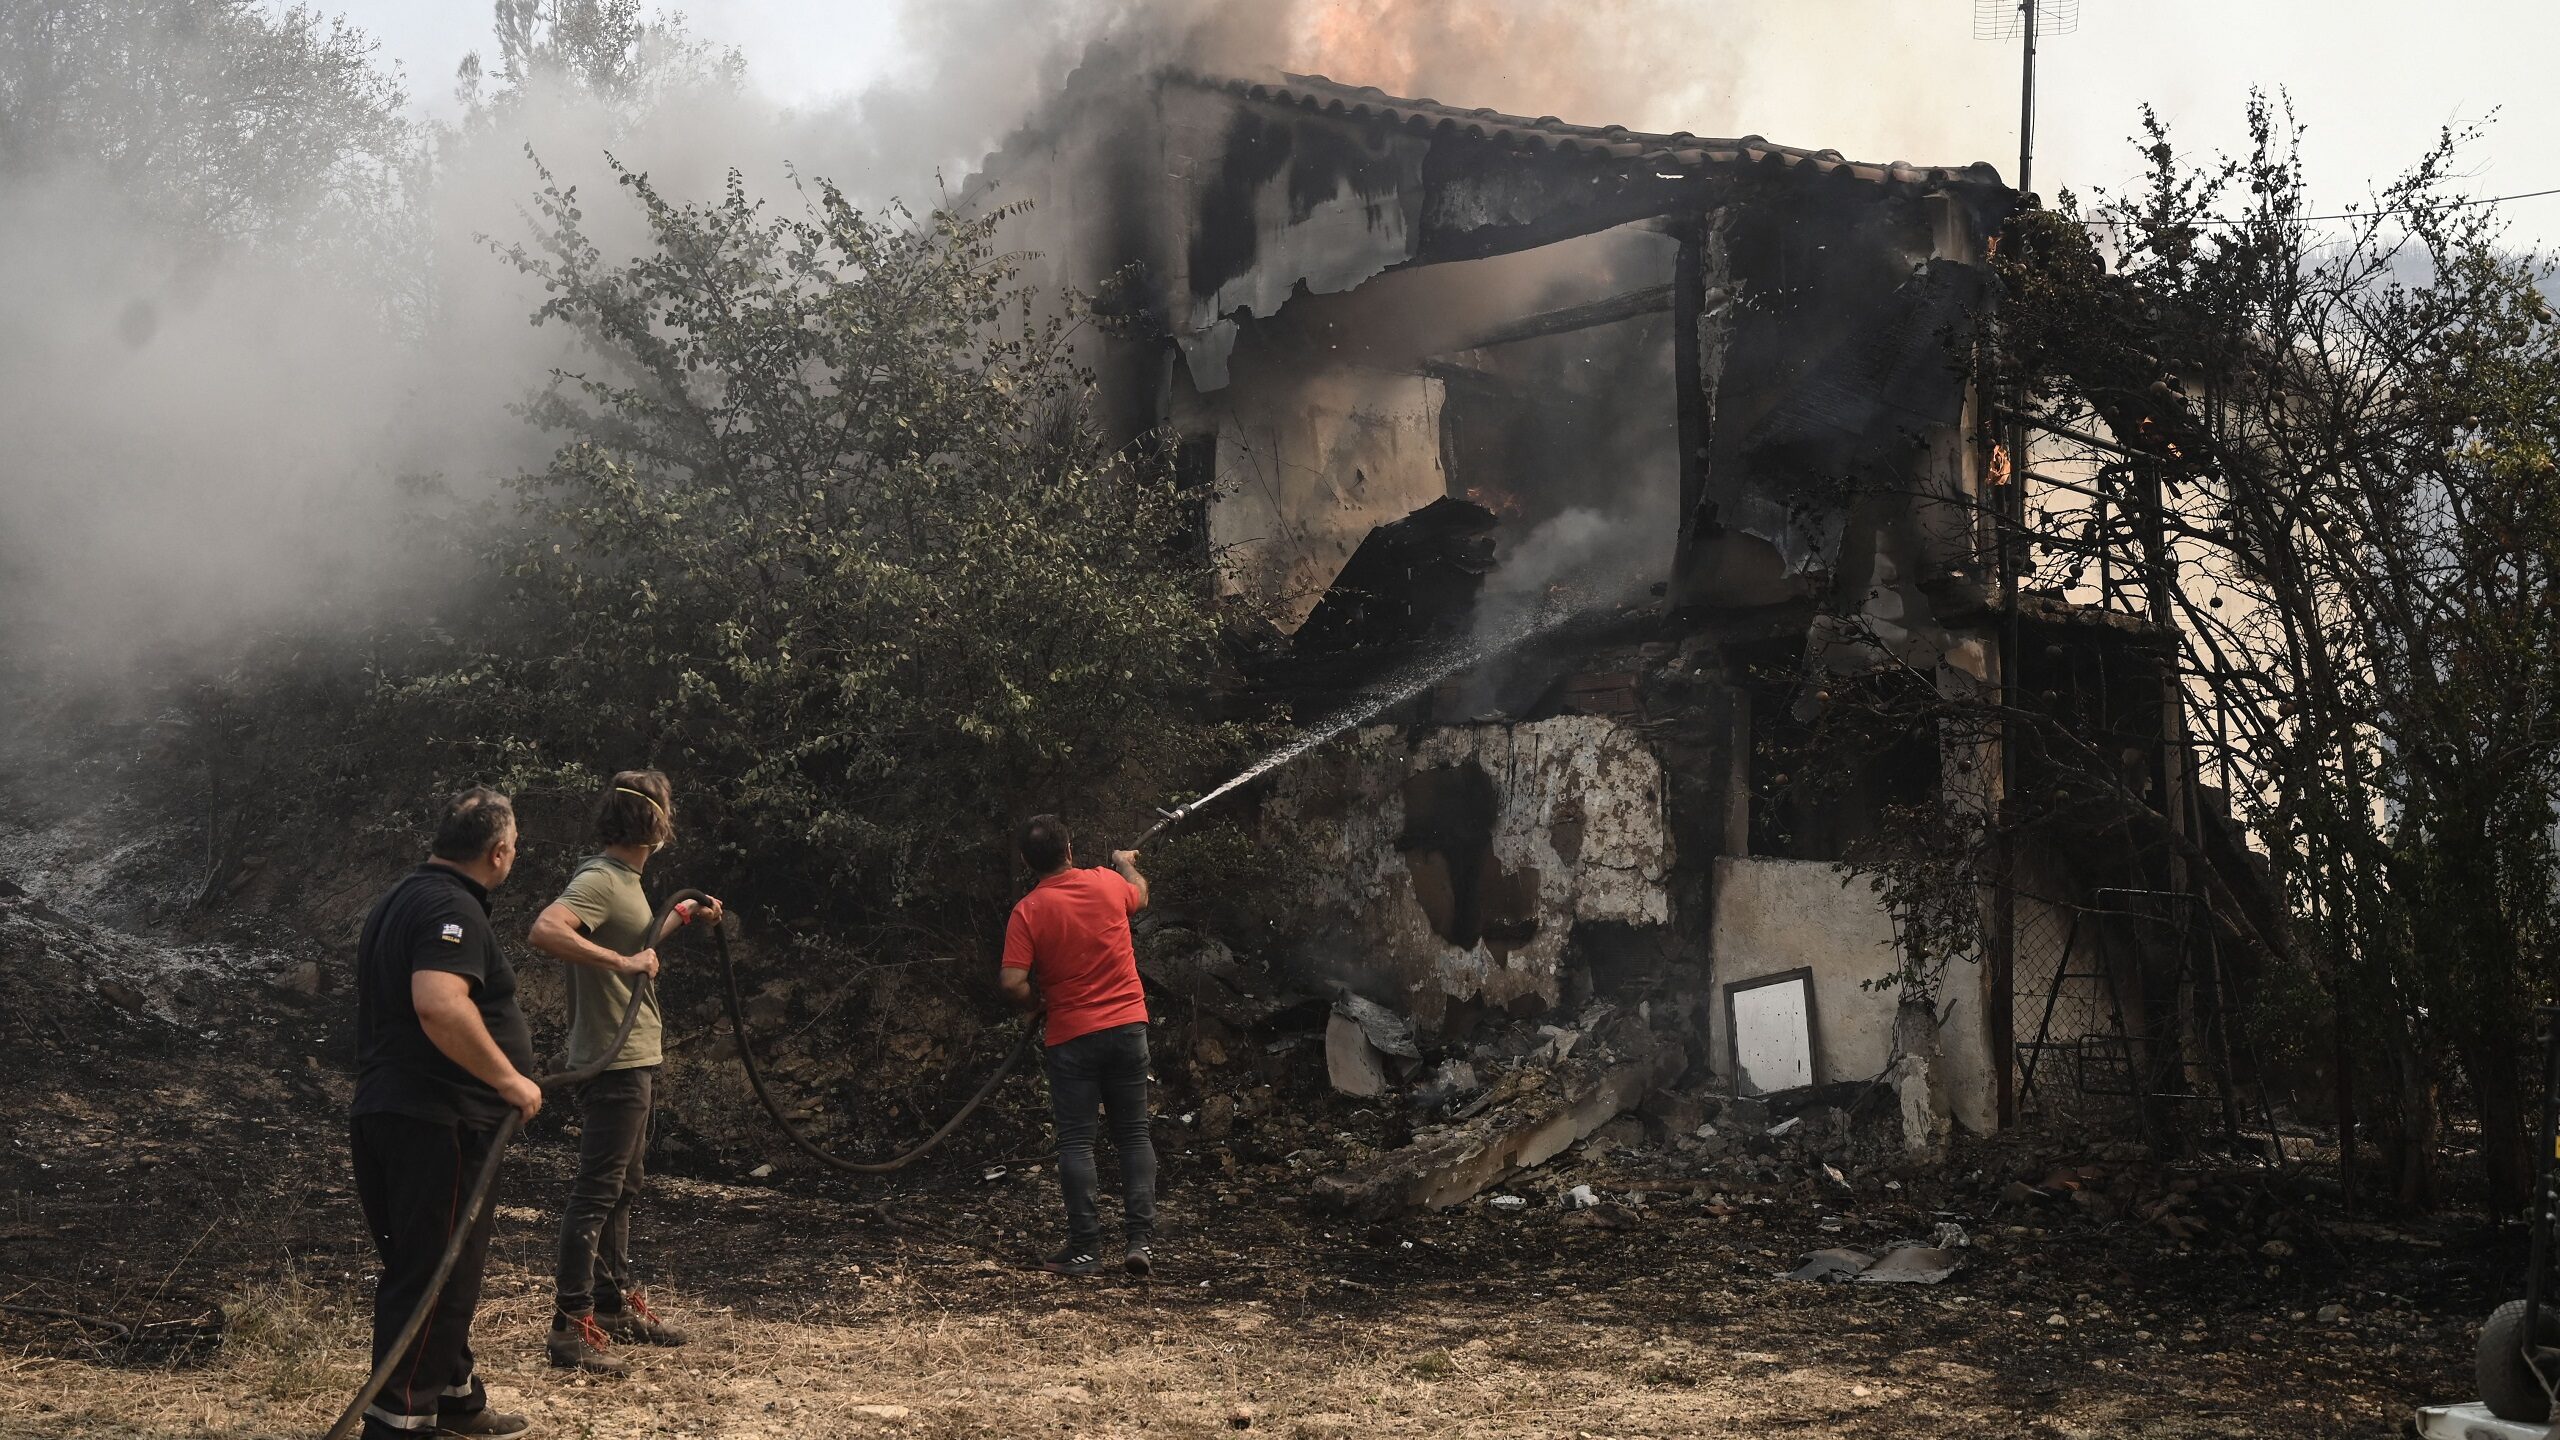 18 Suspected Migrants Found Dead in Greek Wildfire